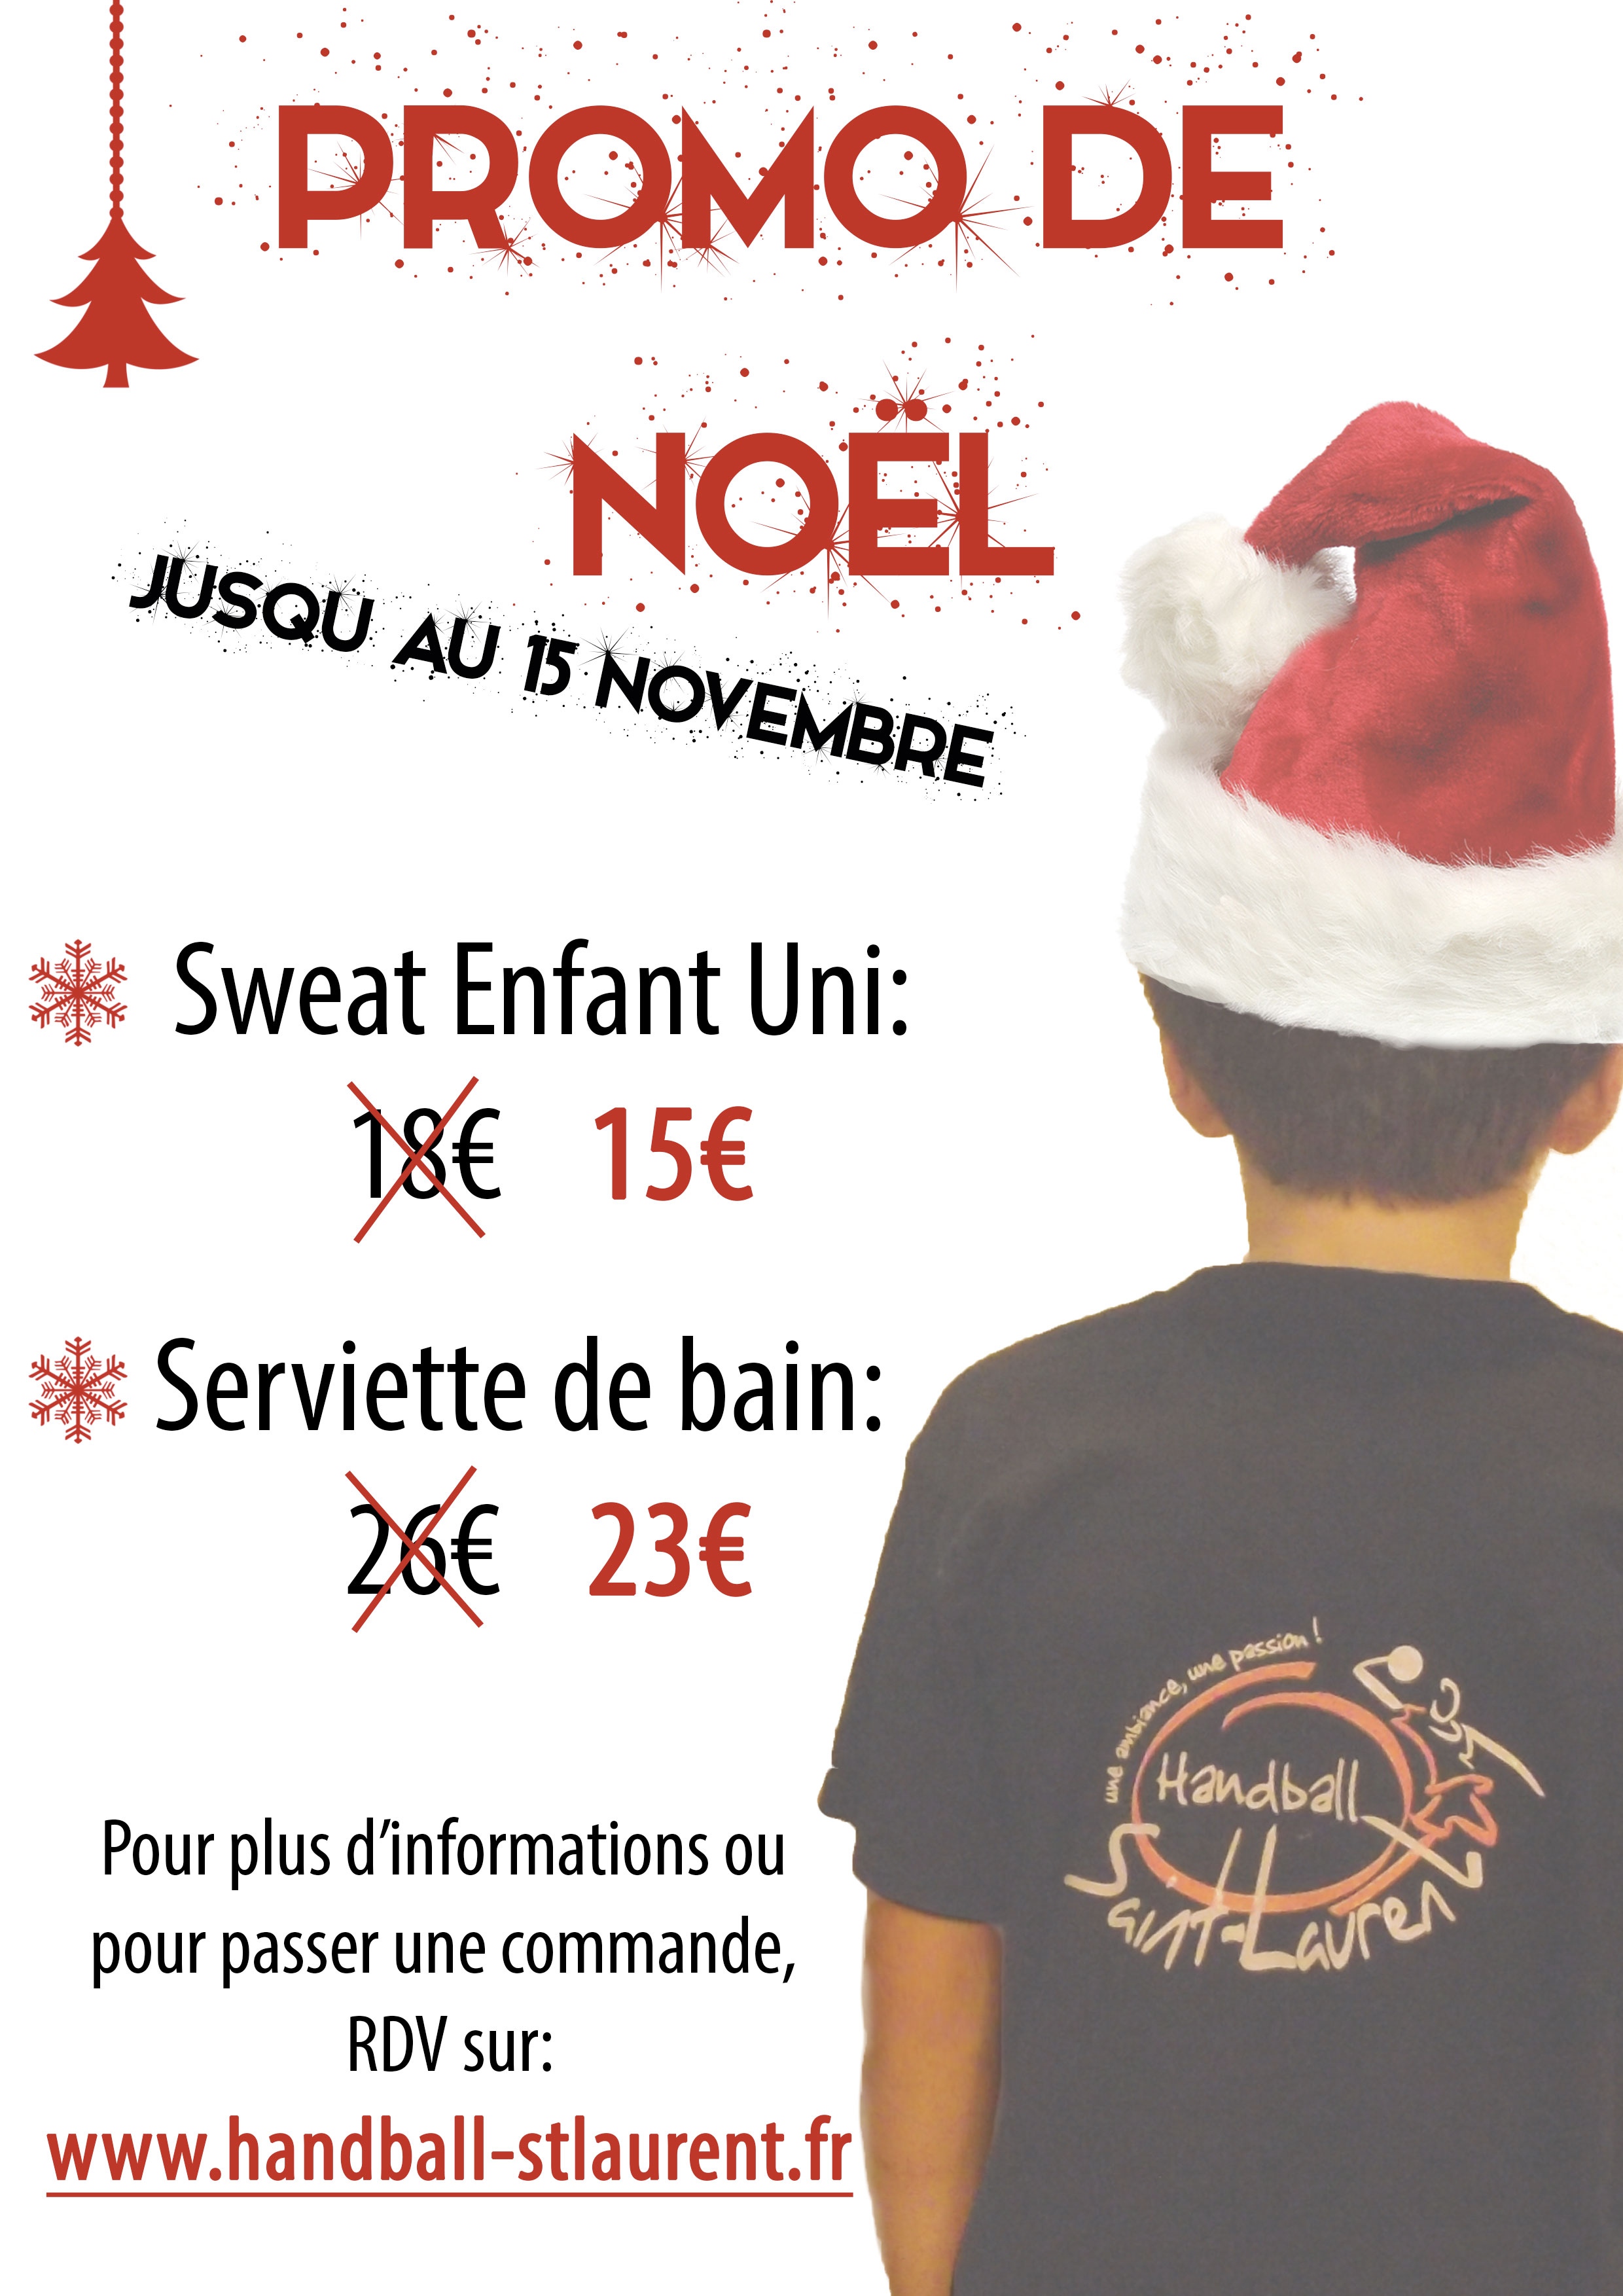 La Promotion de Noël est disponible ! | Handball St Laurent